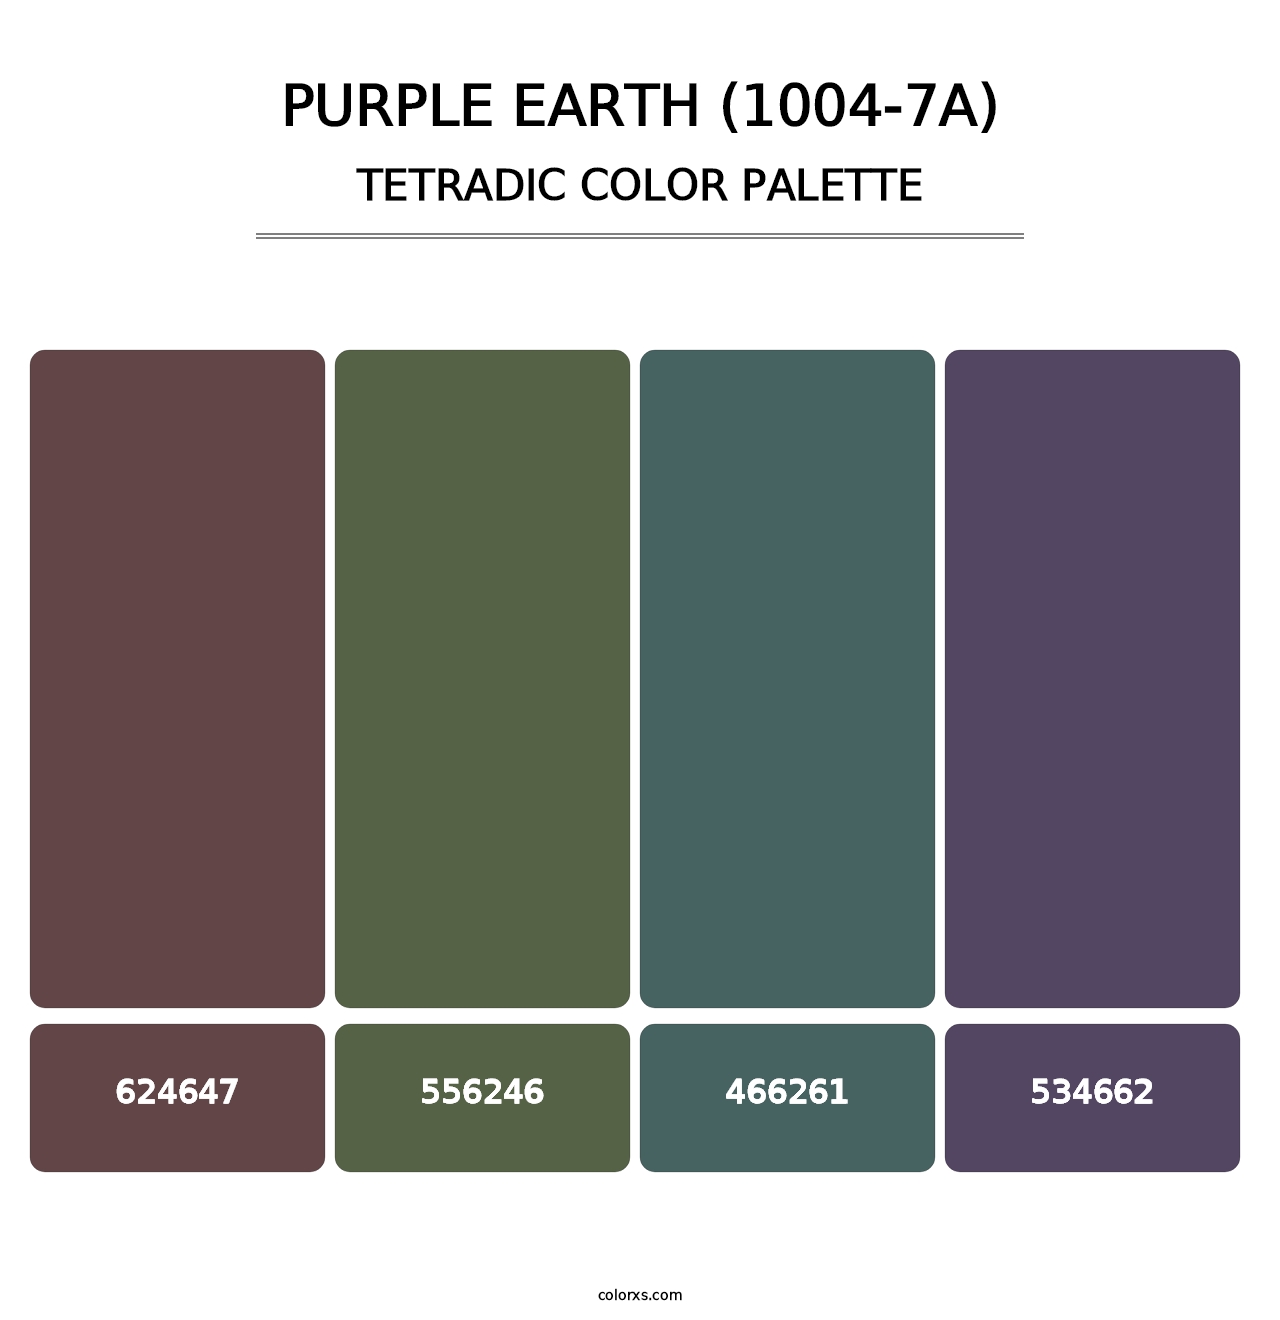 Purple Earth (1004-7A) - Tetradic Color Palette